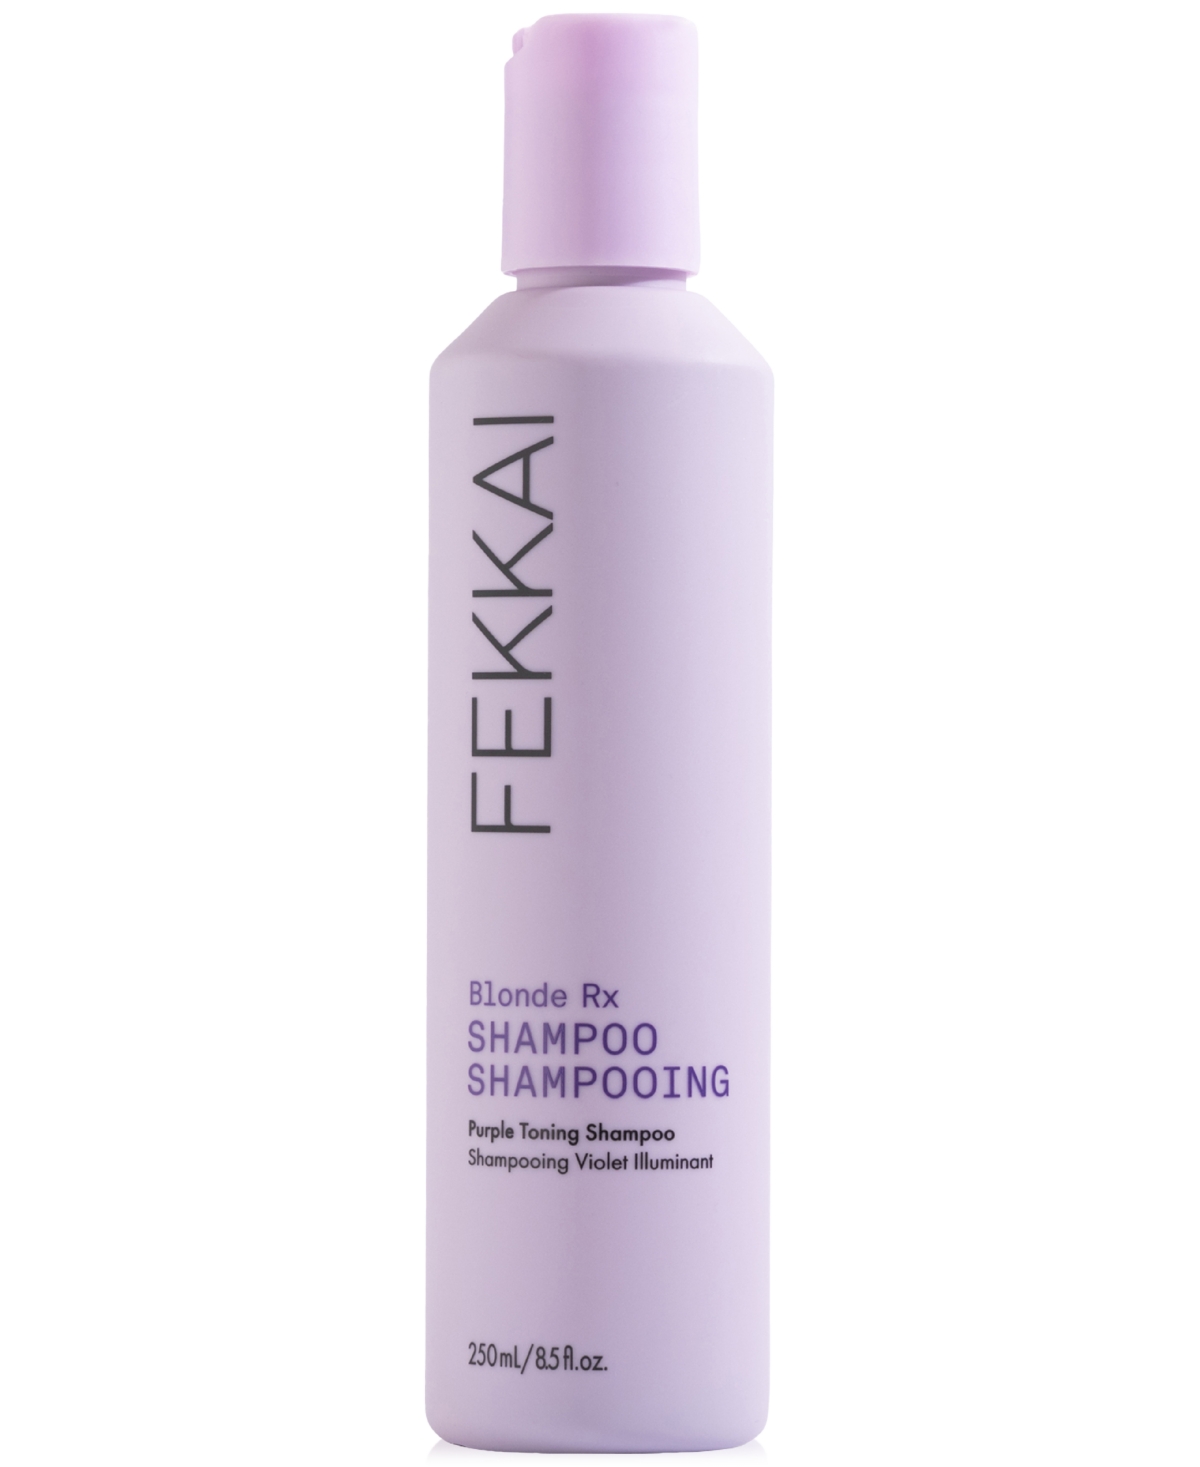 Fekkai Blonde Rx Purple Toning Shampoo, 8.5 oz.